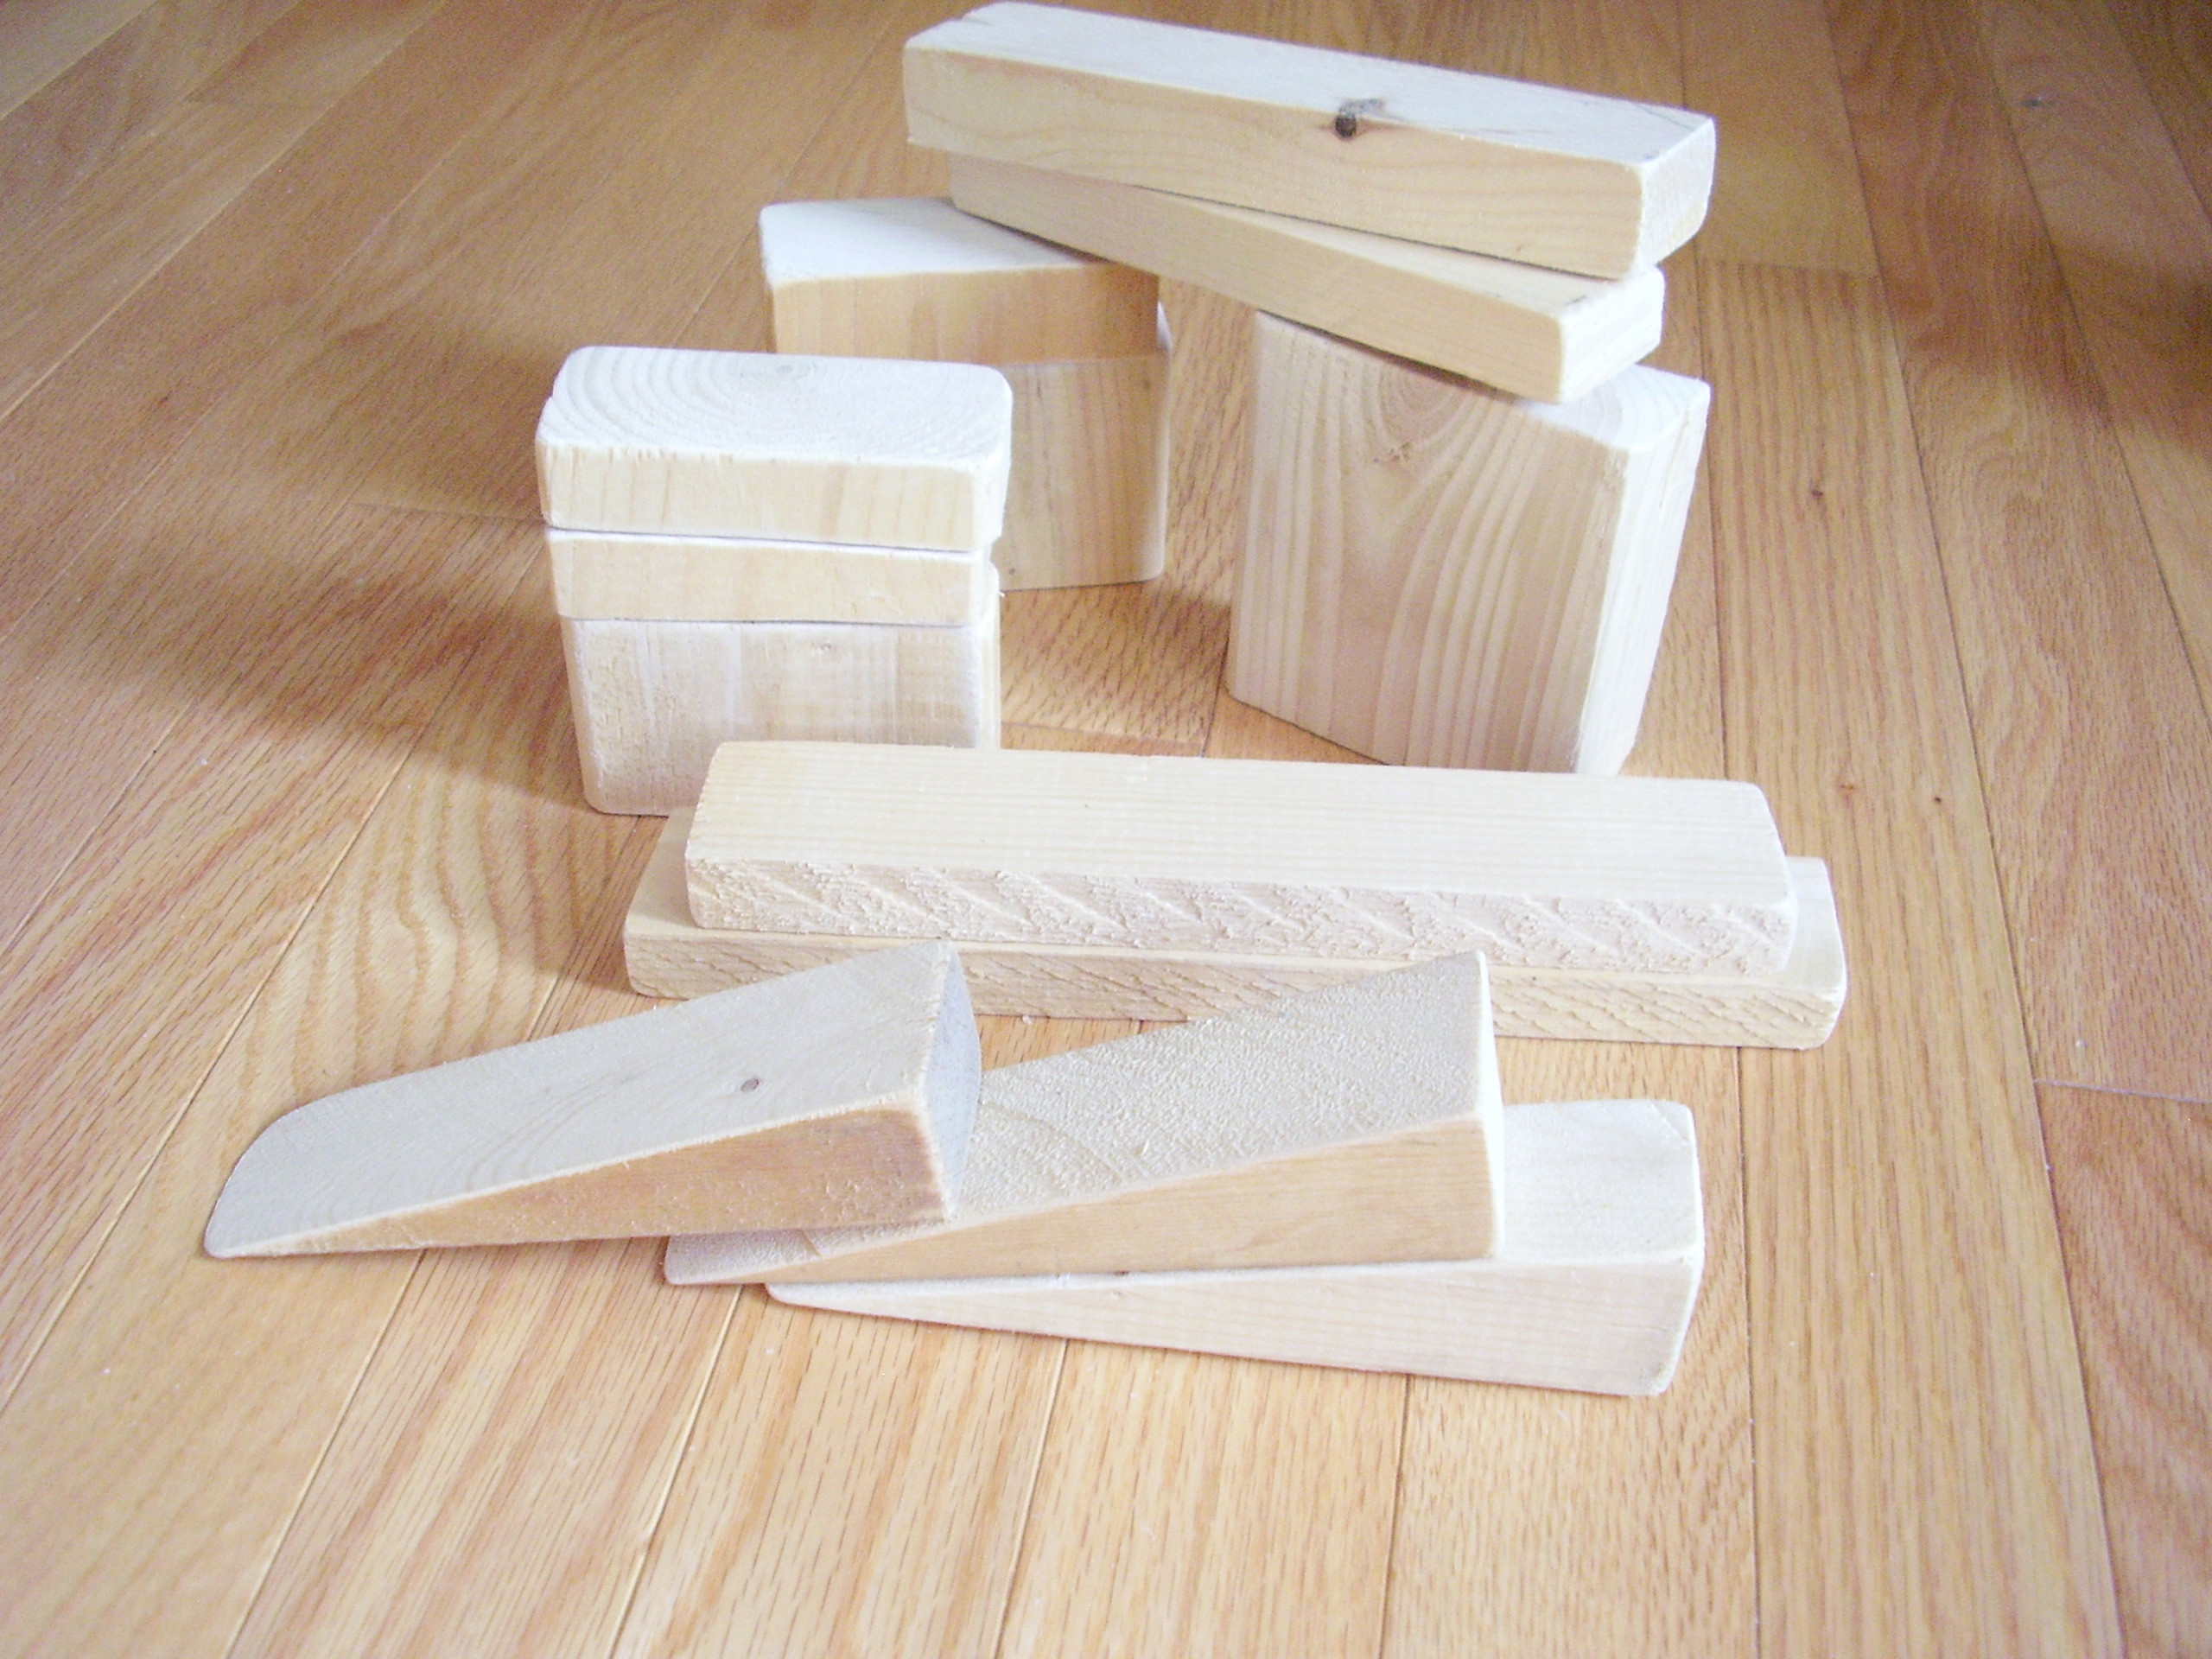 DIY Wooden Blocks
 DIY Wooden Building Blocks for Imaginative Play